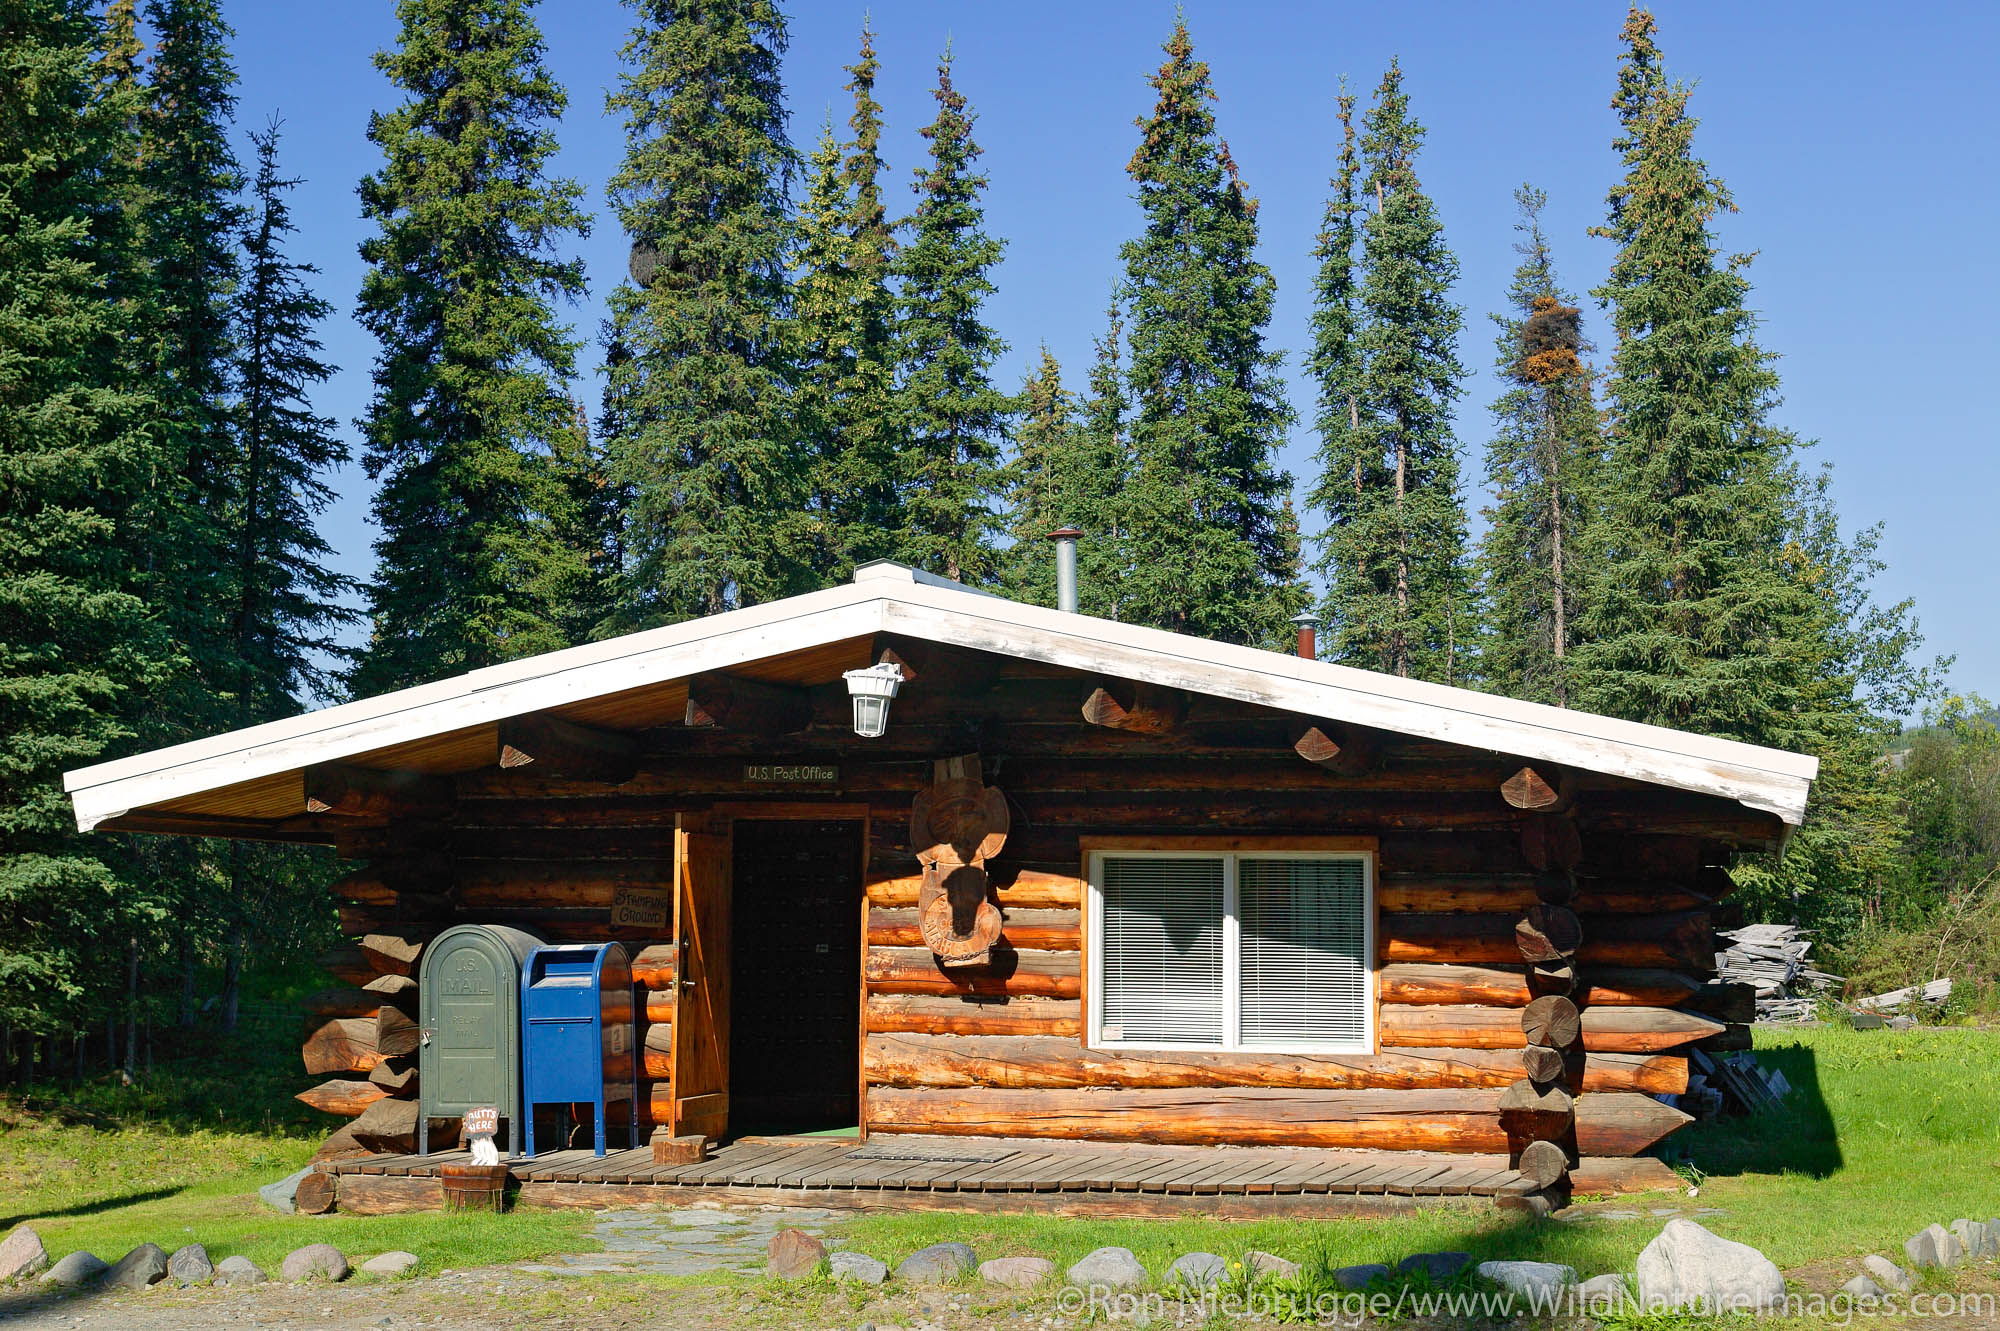 The Slana Post Office at the beginning of the Nabesna Road, Wrangell-St Elias National Park, Alaska.